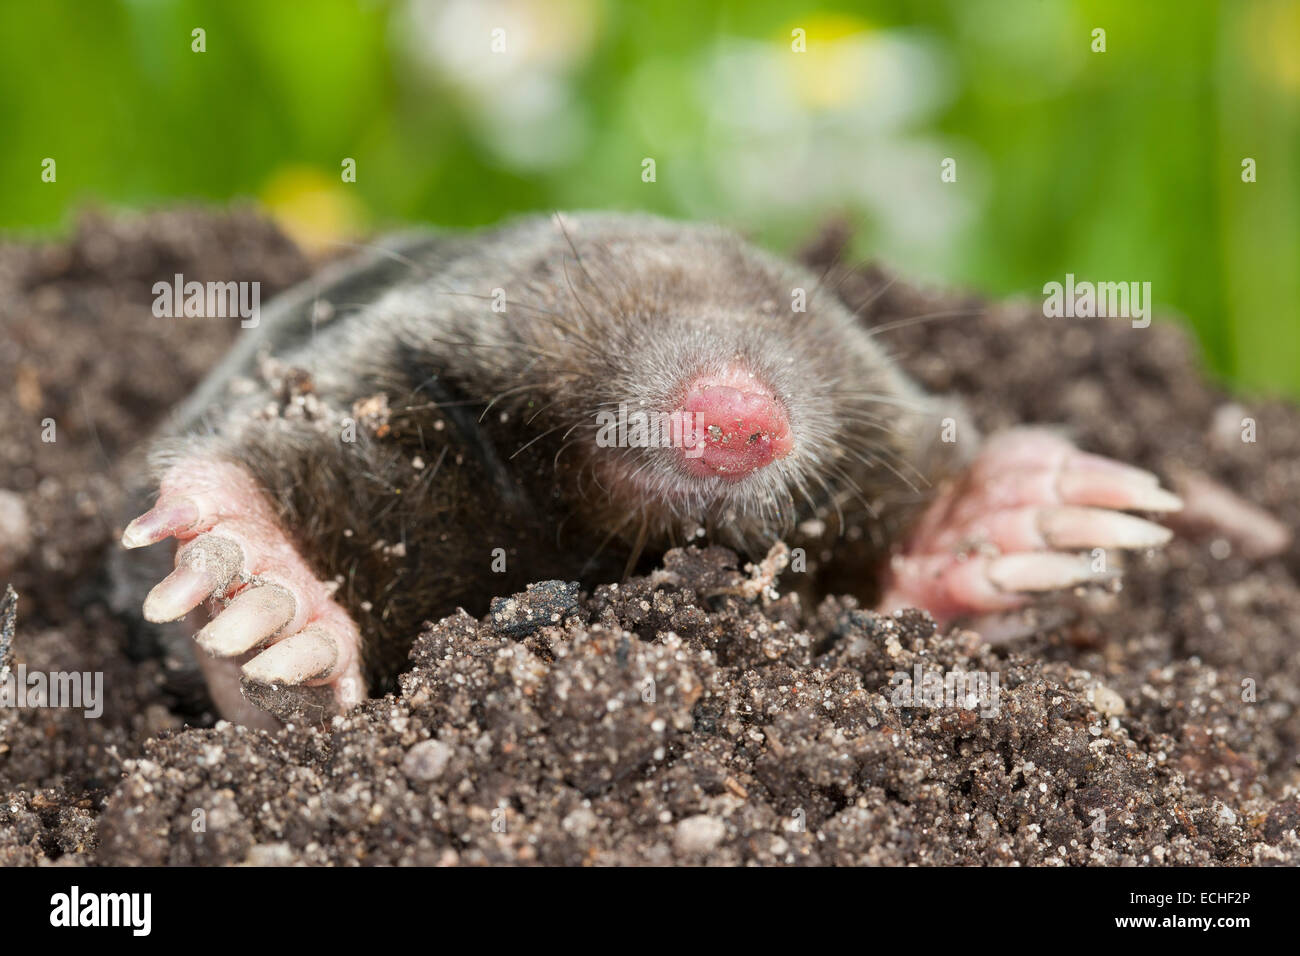 Unione mole, comune mole, mole, molehill, Maulwurf, Maulwurfshügel, Europäischer Maulwurf, Talpa europaea, Taupe comune Foto Stock